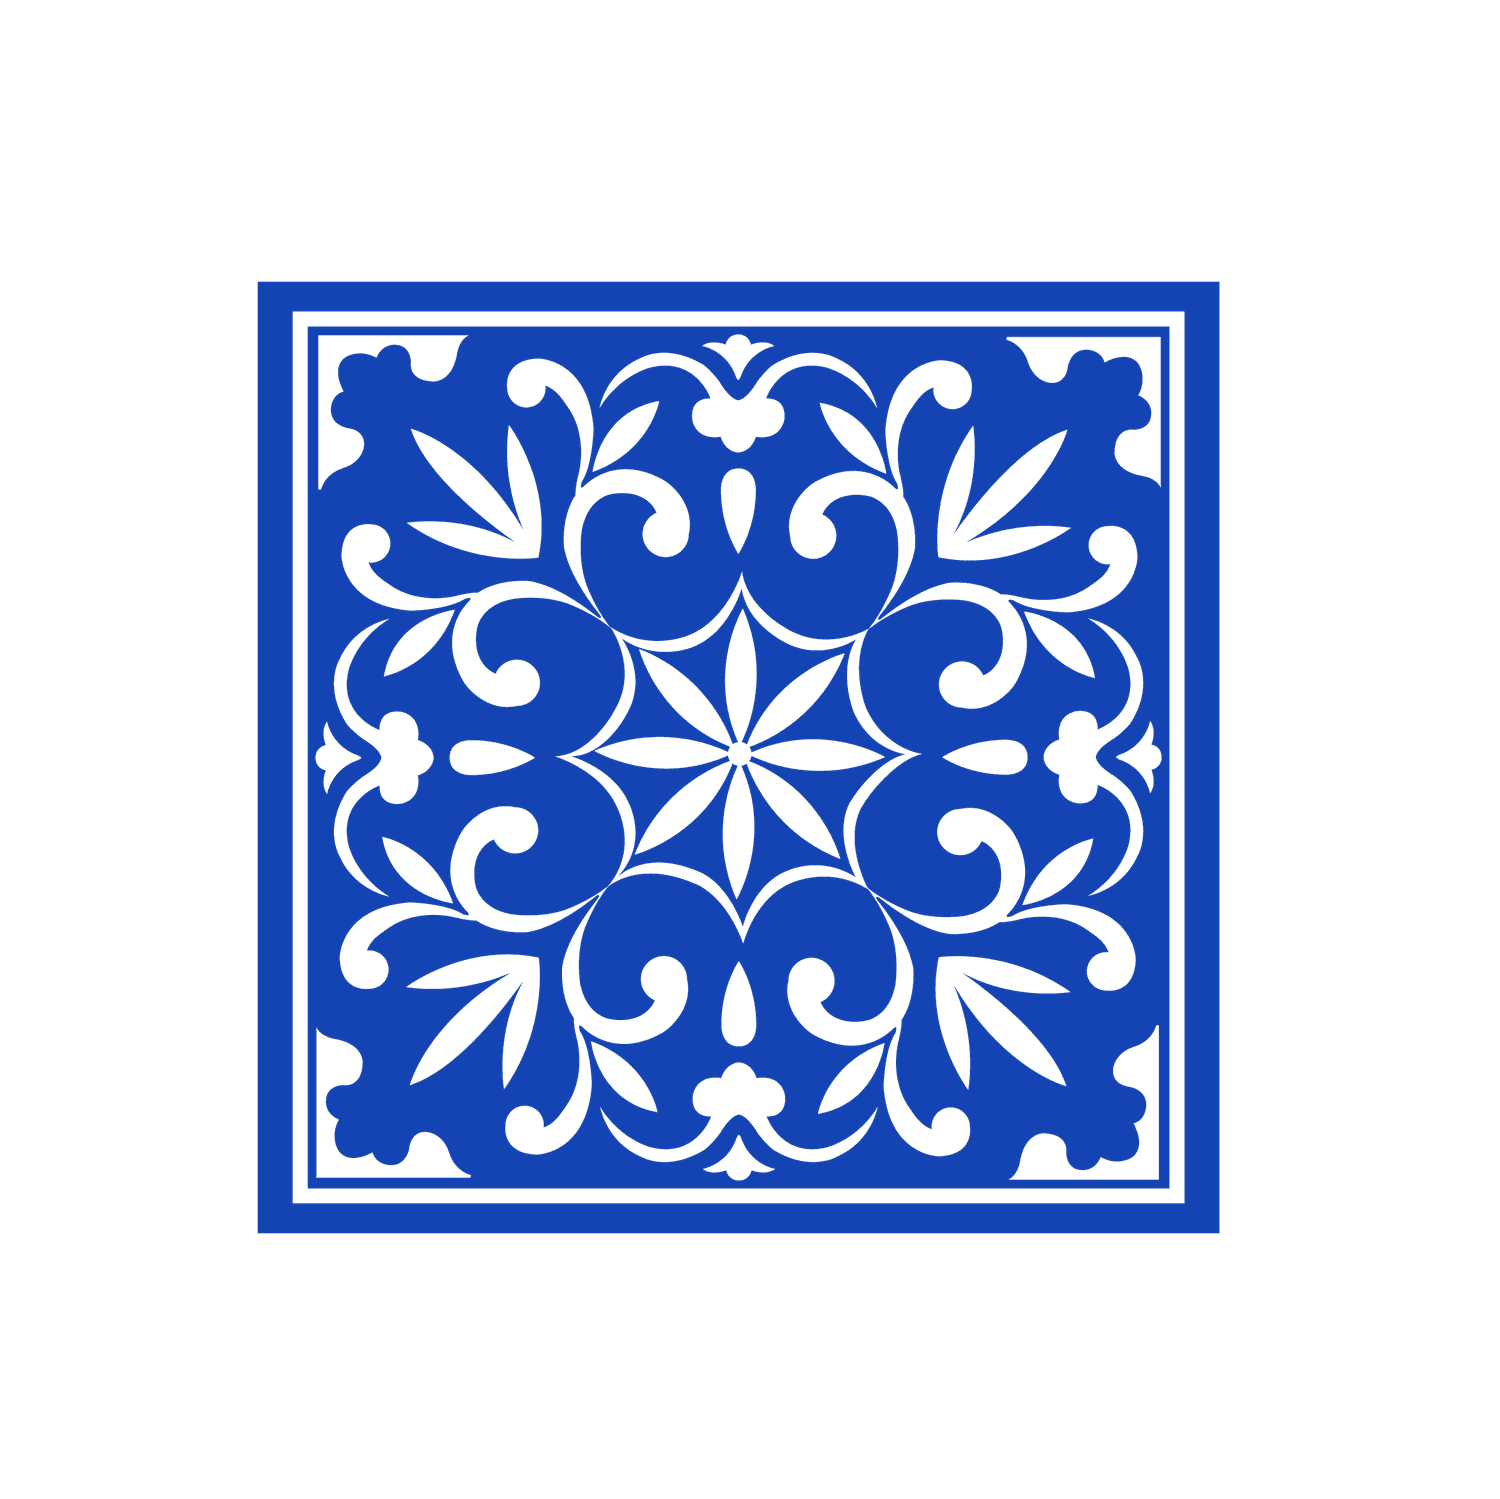 azulejo inspired ceramic tiles pattern, perfect for home decor